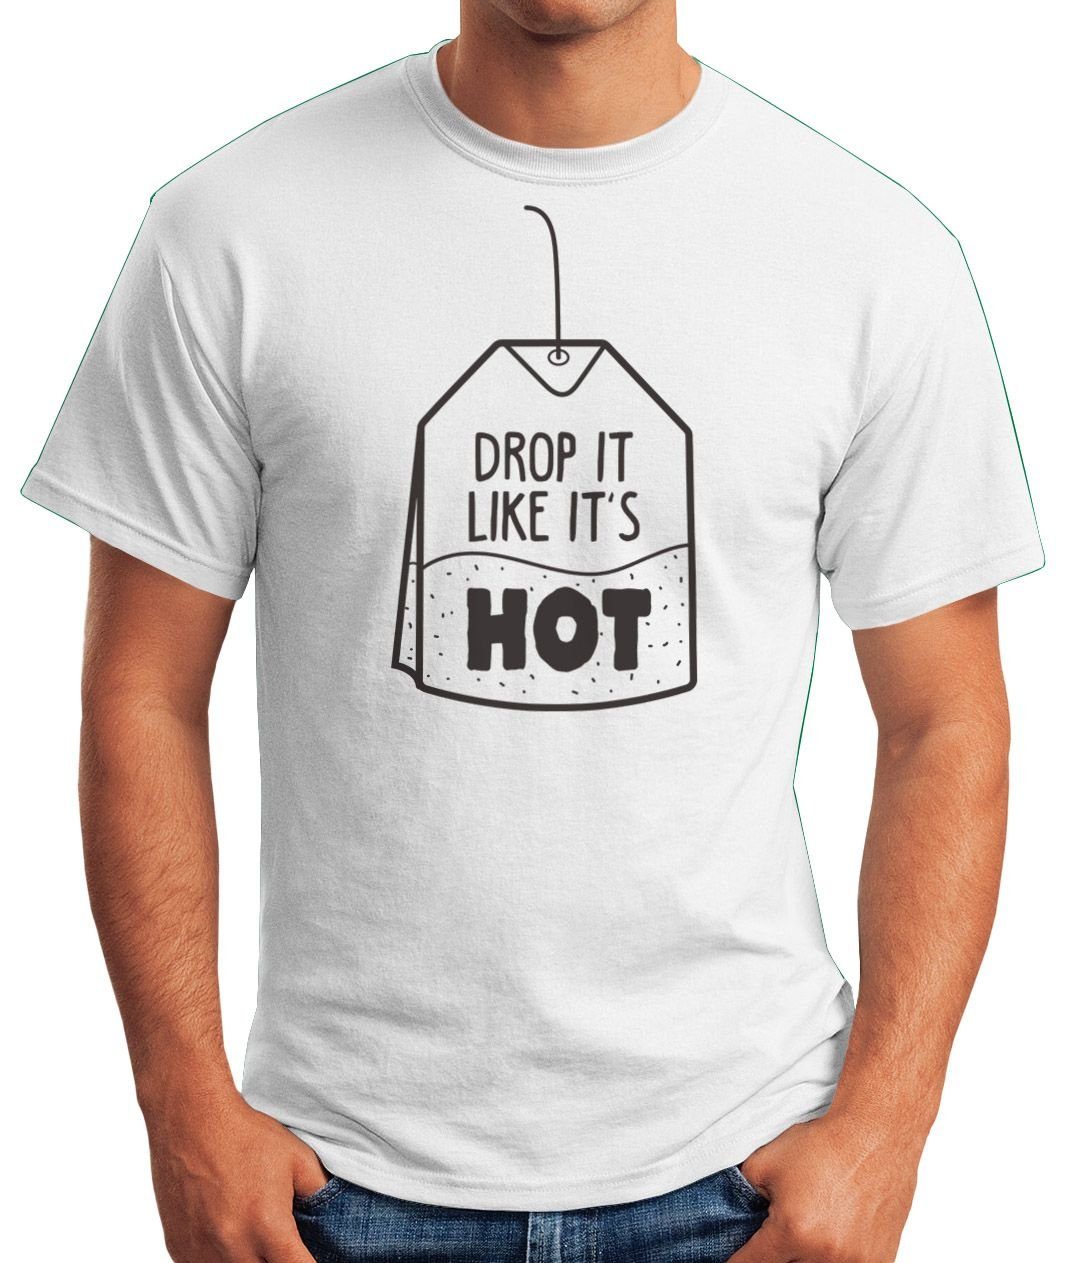 MoonWorks Print-Shirt Herren Moonworks® Print it T-Shirt Drop hot it's Fun-Shirt mit Spruch like